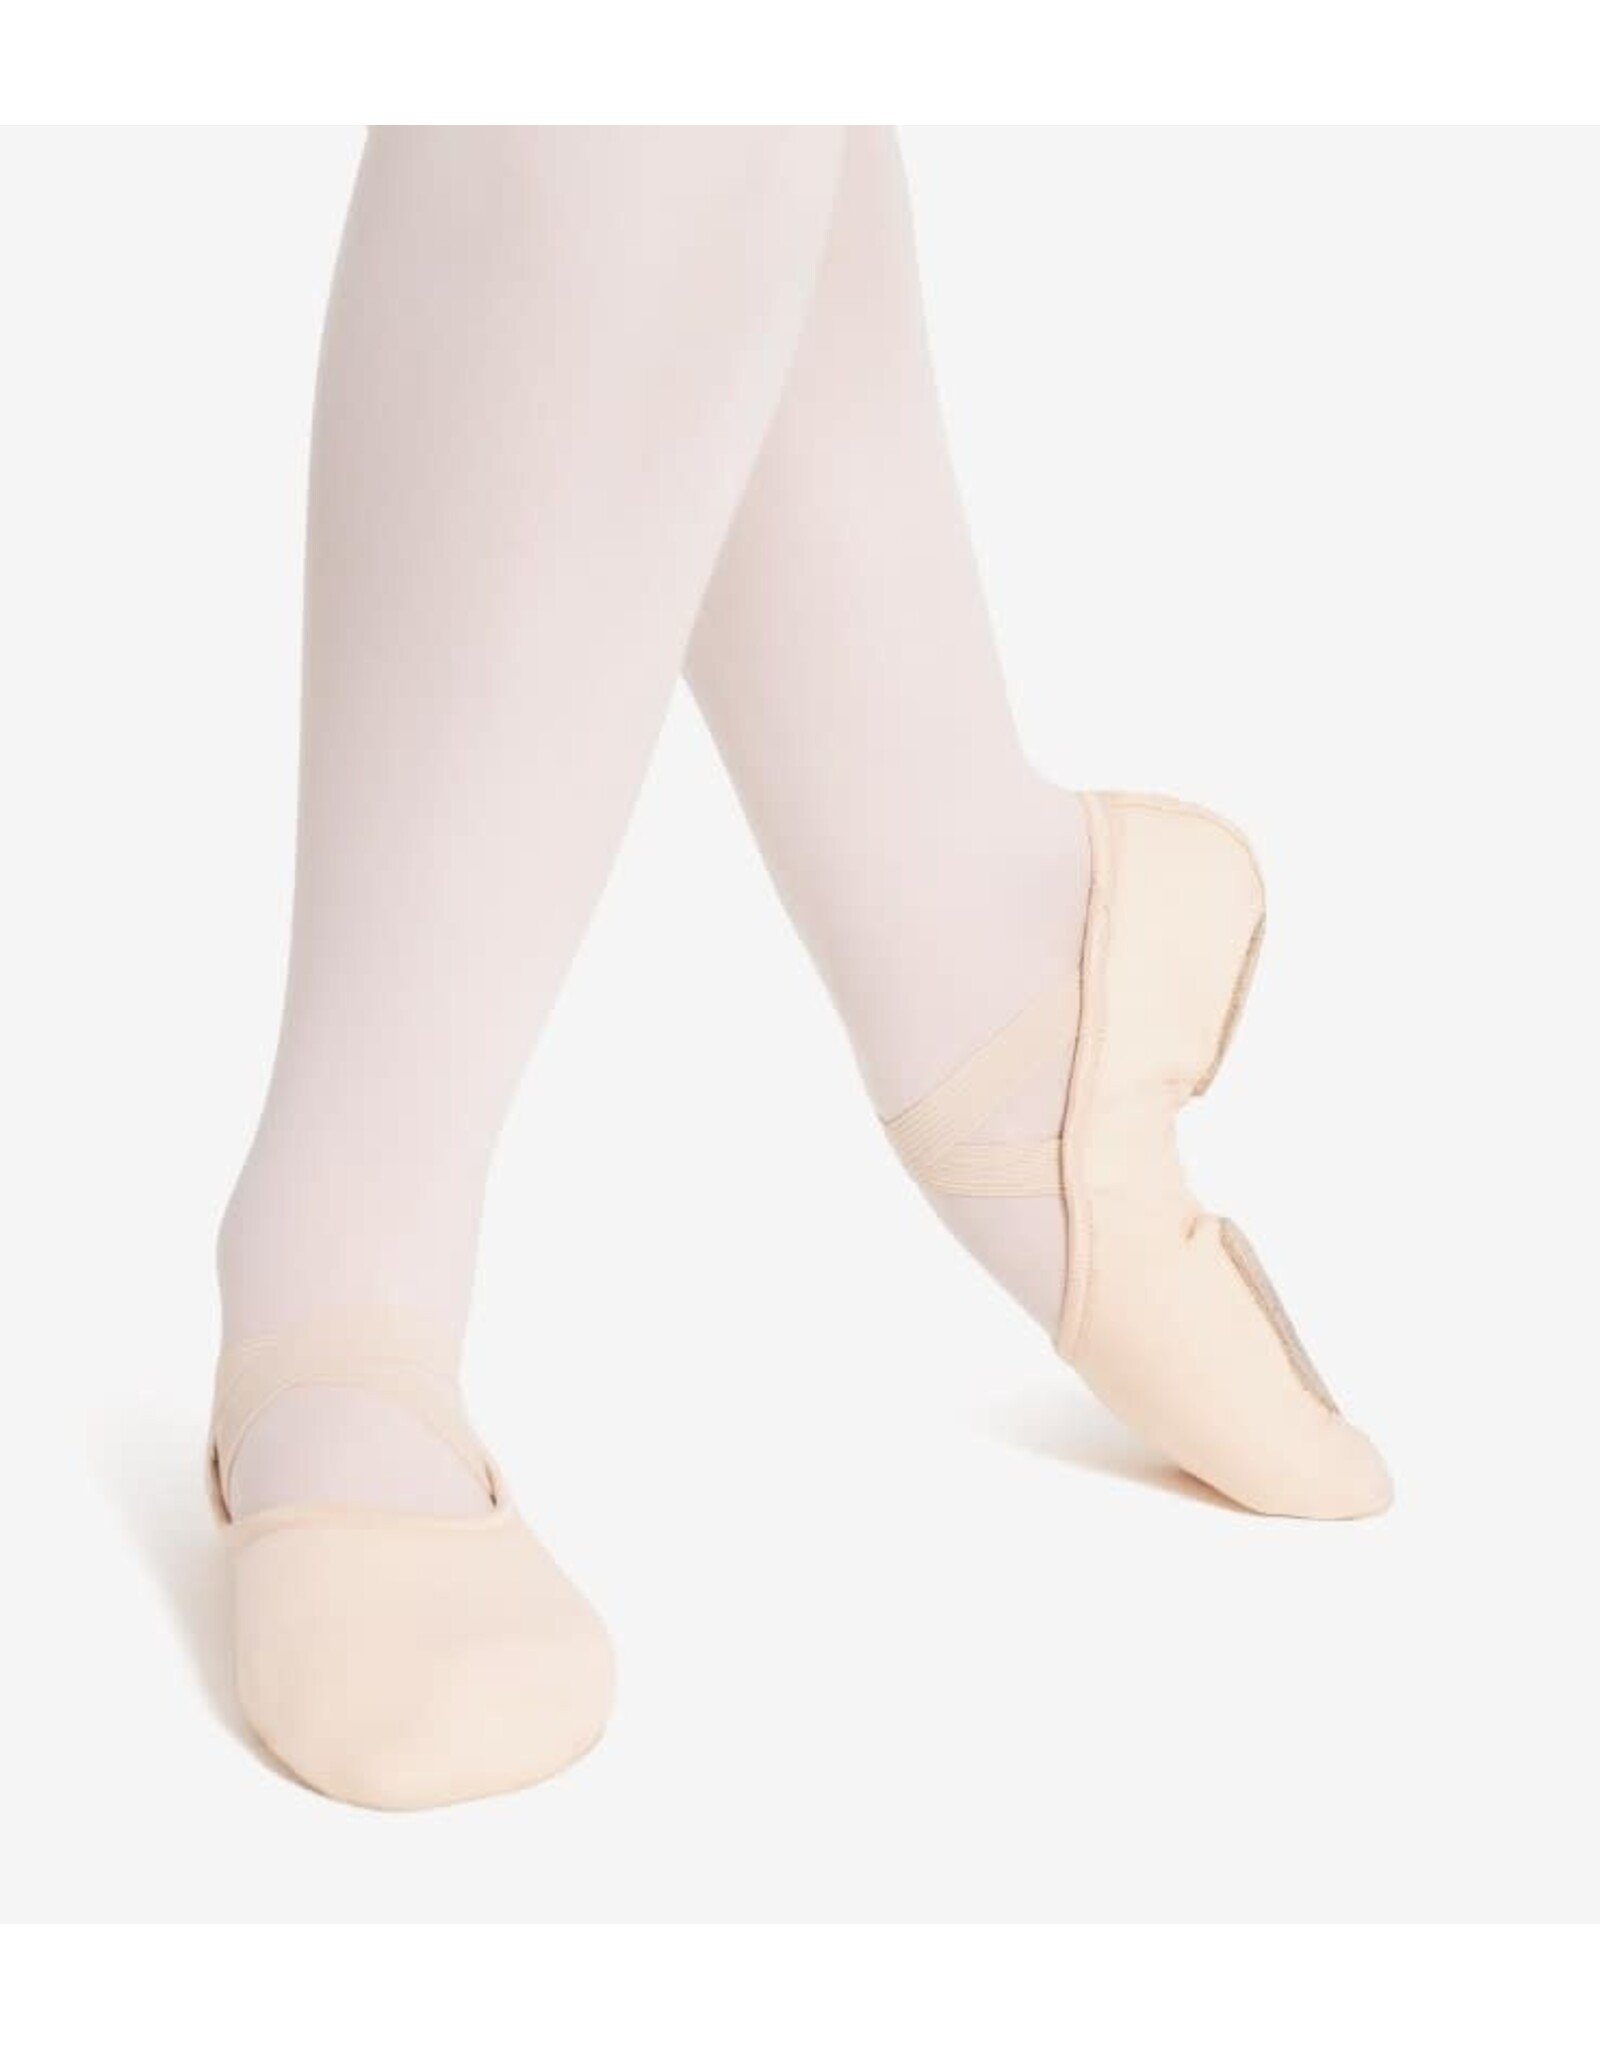 Capezio 2037W pink stretch canvas soft ballet shoes Hanami RUN SMALL